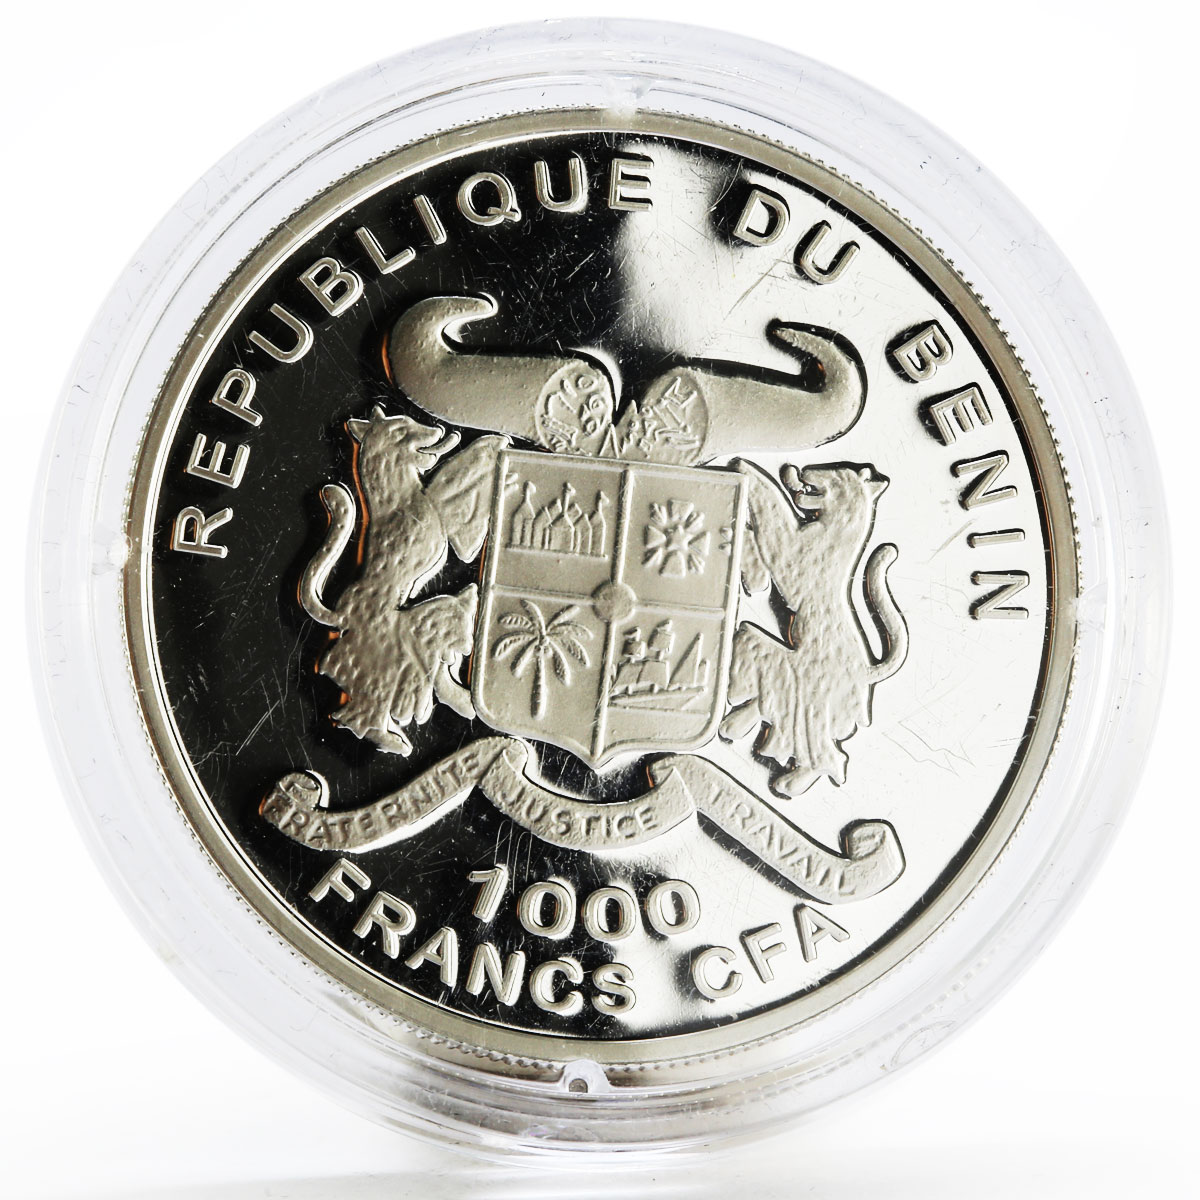 Benin 1000 francs Amerigo Vespucci Ship Discovering of America silver coin 2005